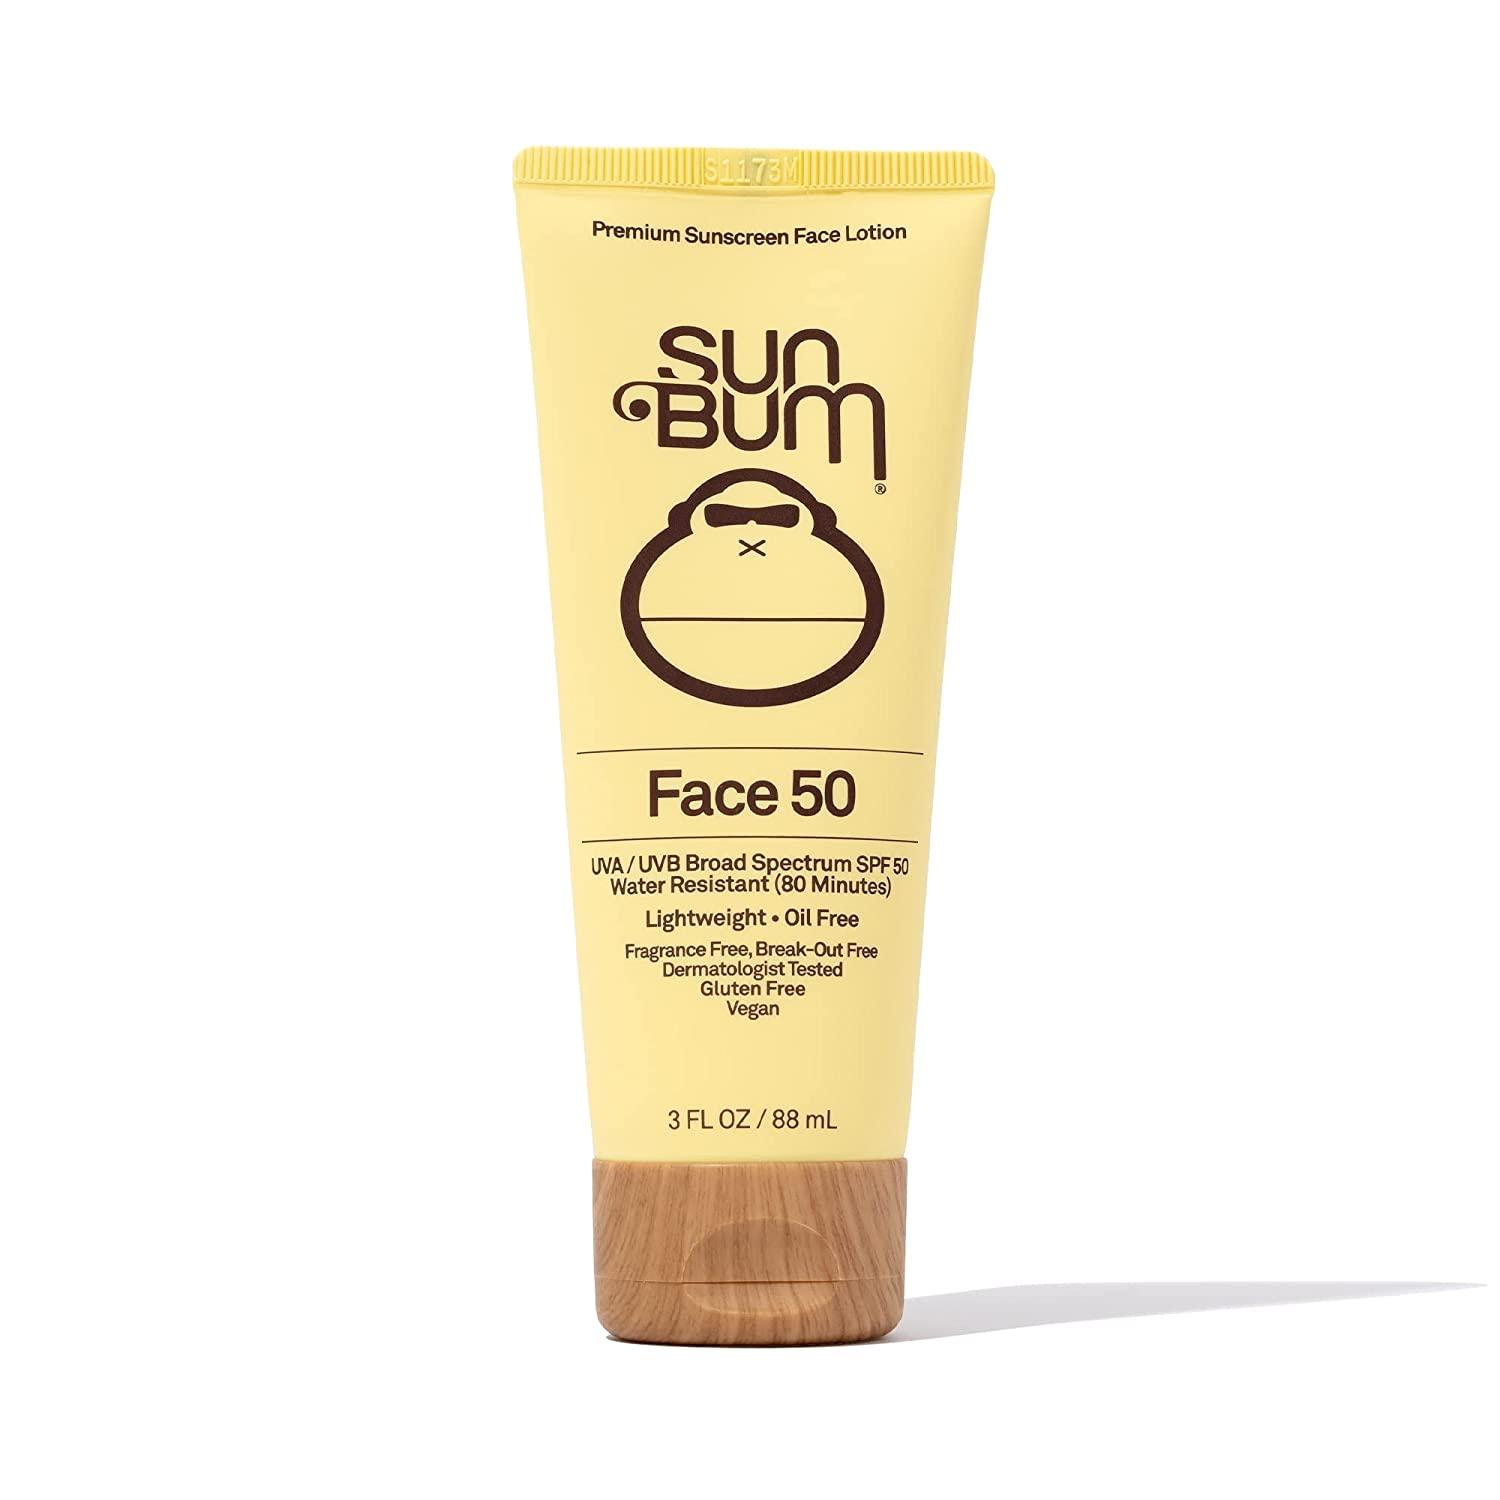 Sun Bum Original Crème Solaire pour le Visage SPF 50 - mondialpharma.com